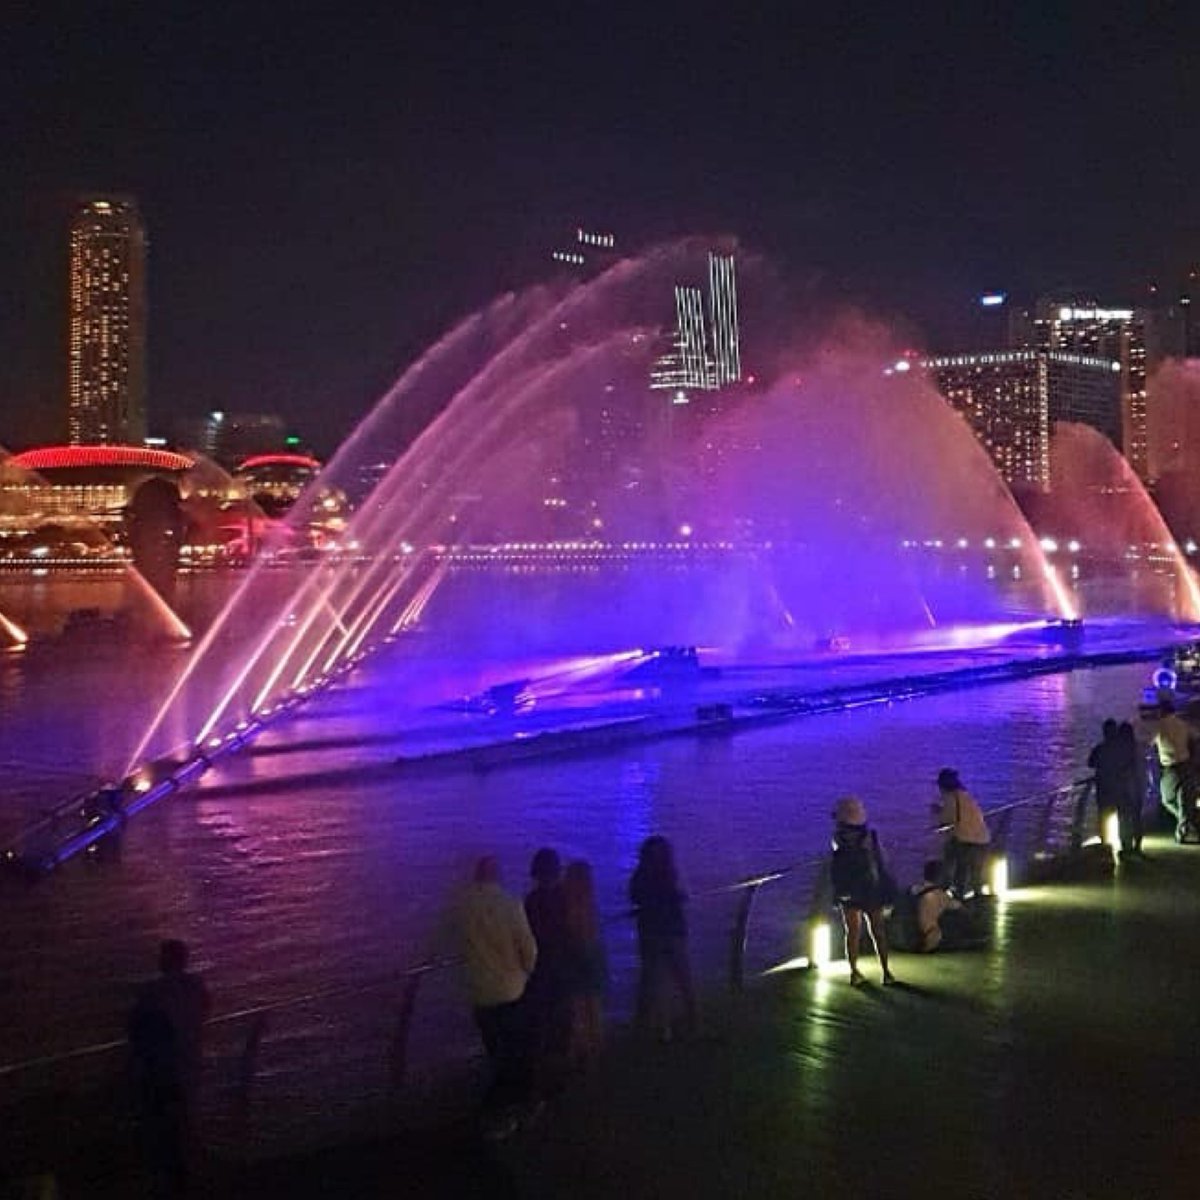 Friday night in Singapore #GardensByTheBay